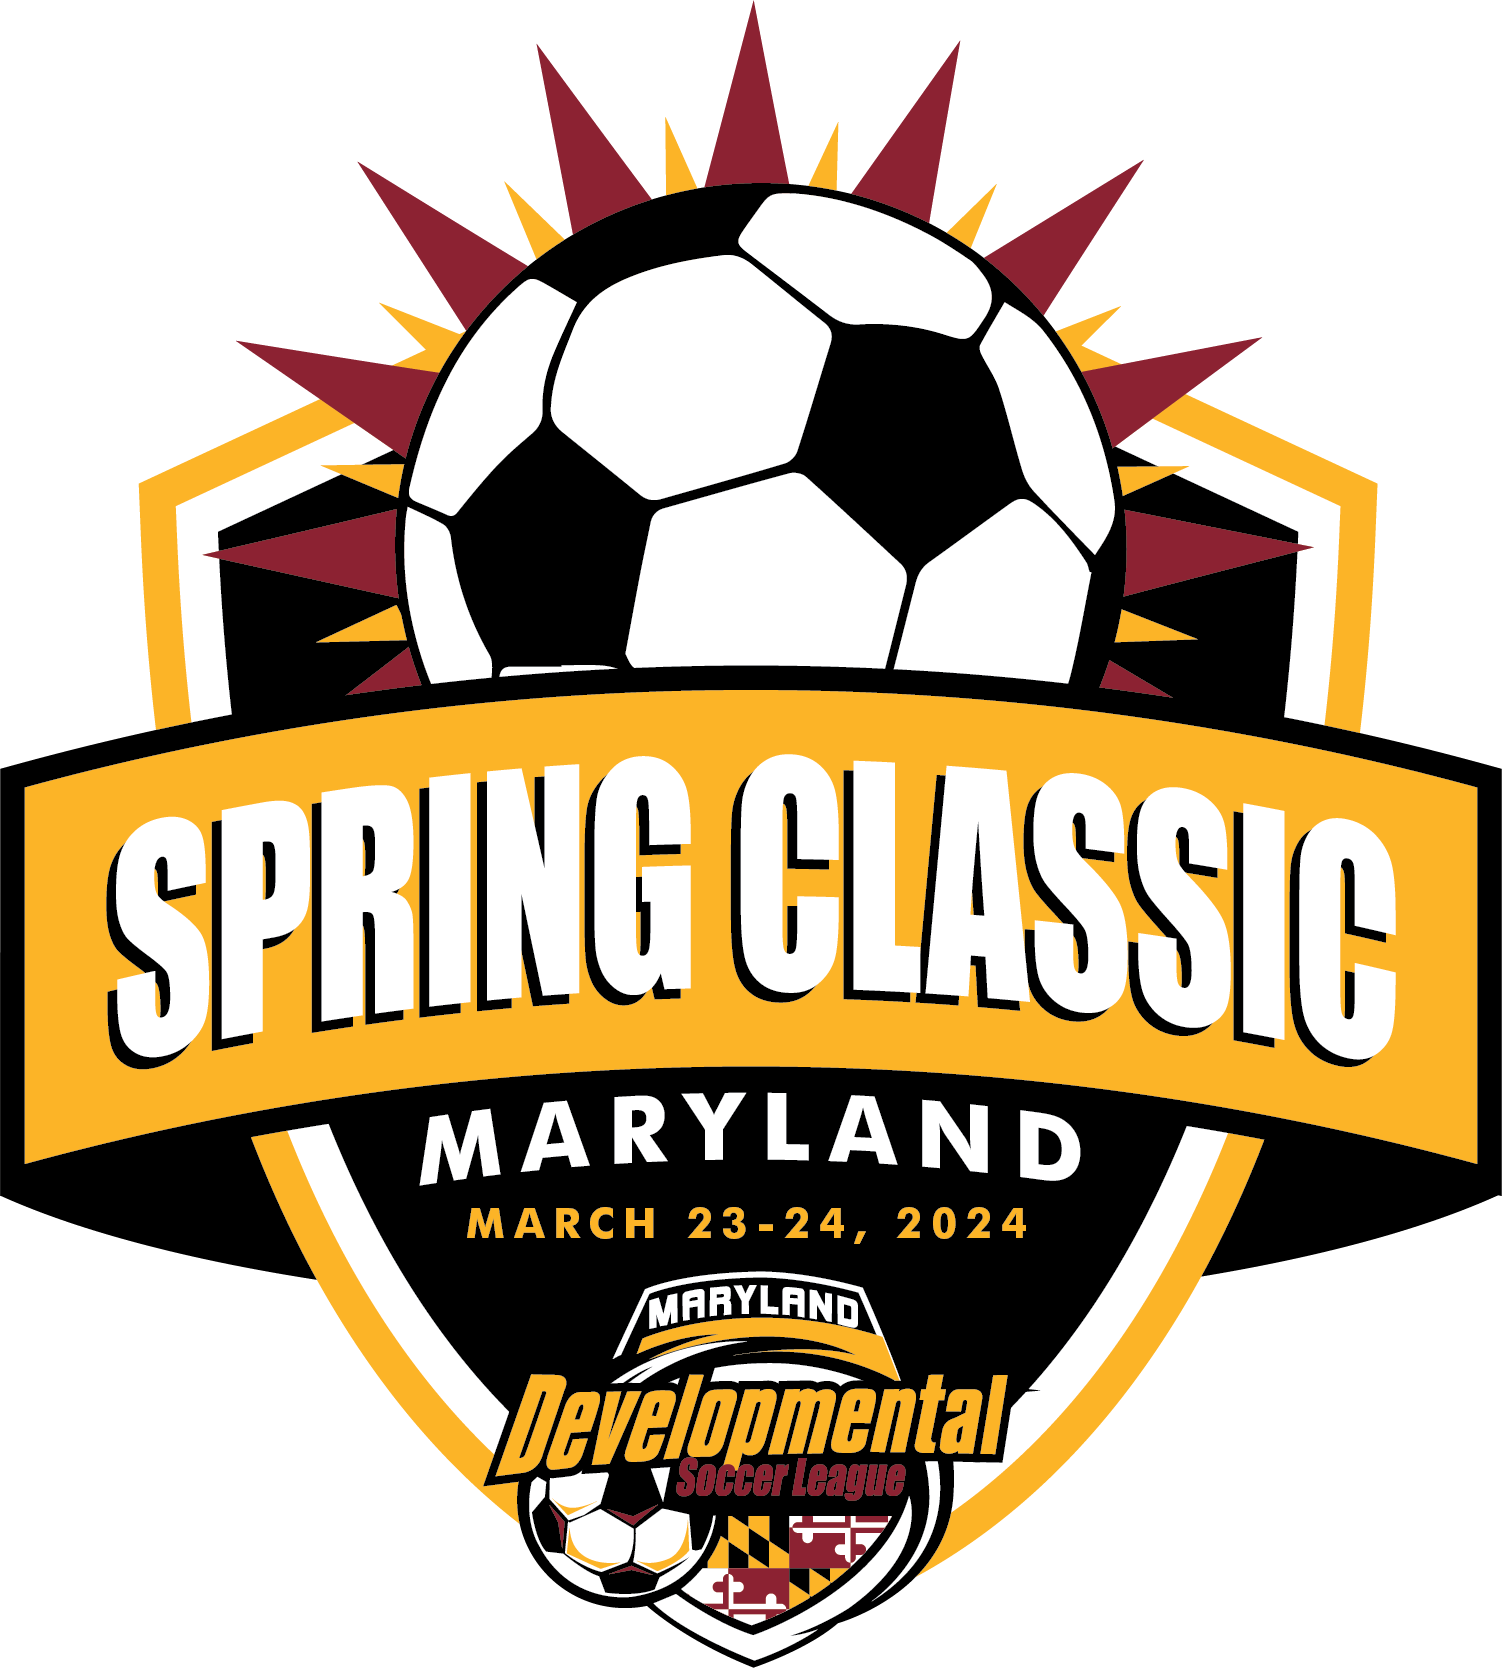 MDSL Spring Classic Maryland Developmental Soccer League